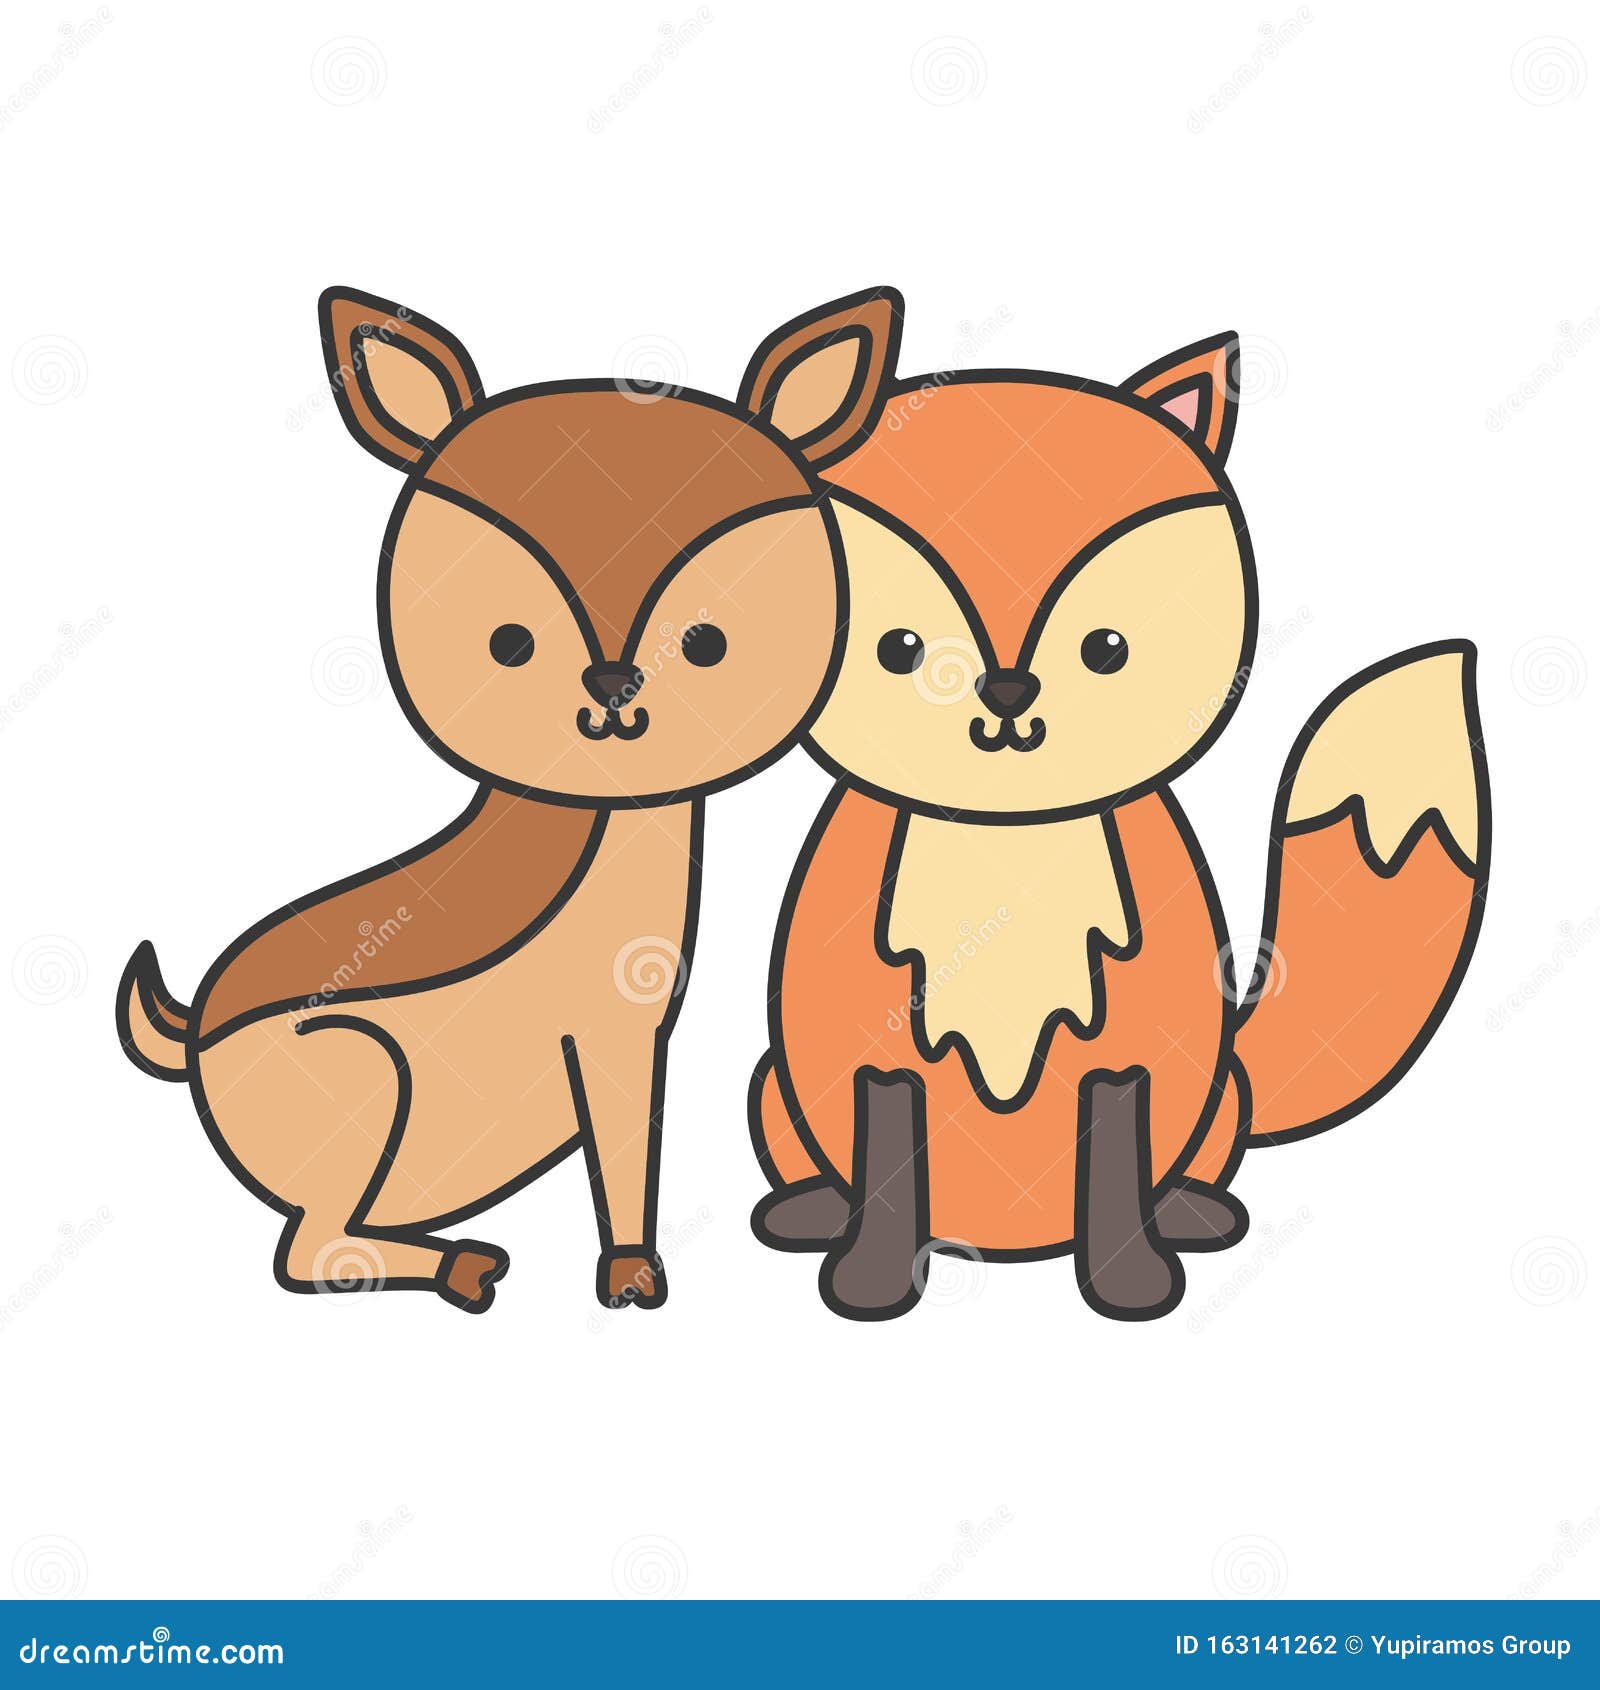 Little Cute Deer and Fox Cartoon Animals Stock Vector - Illustration of ...